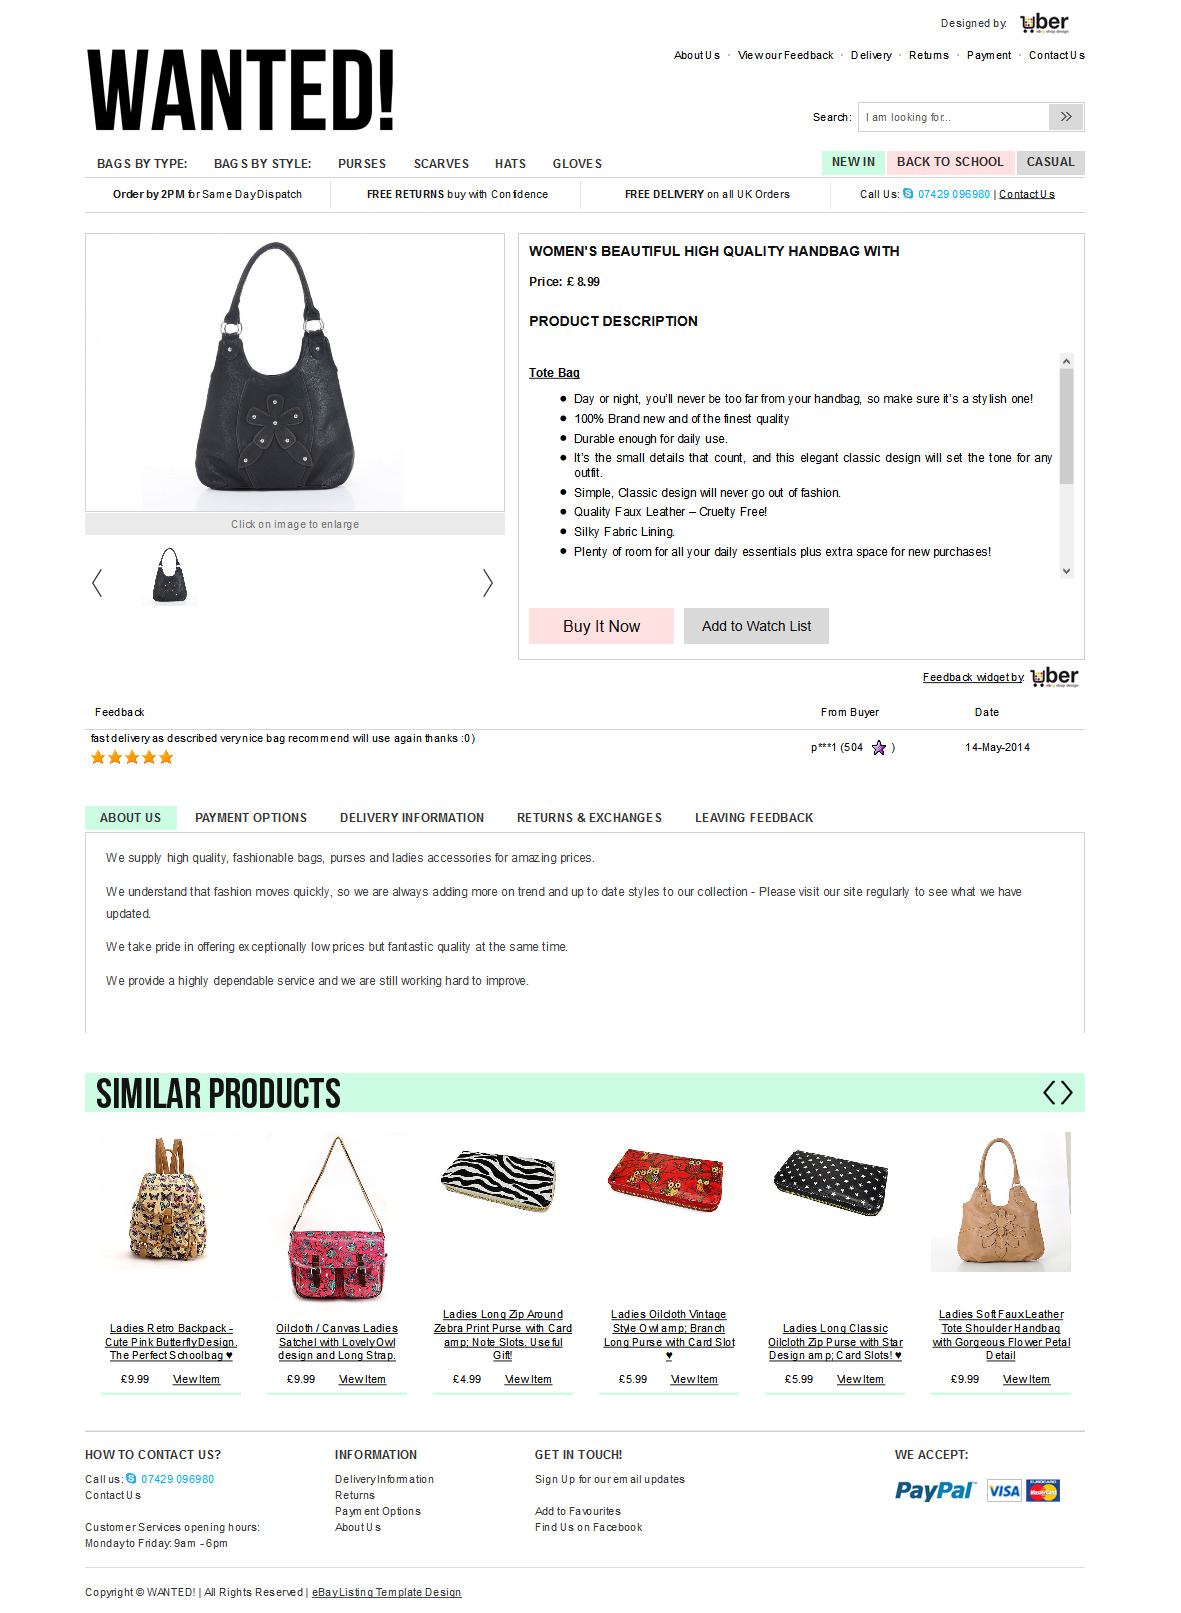 WantedBags ebay item template design